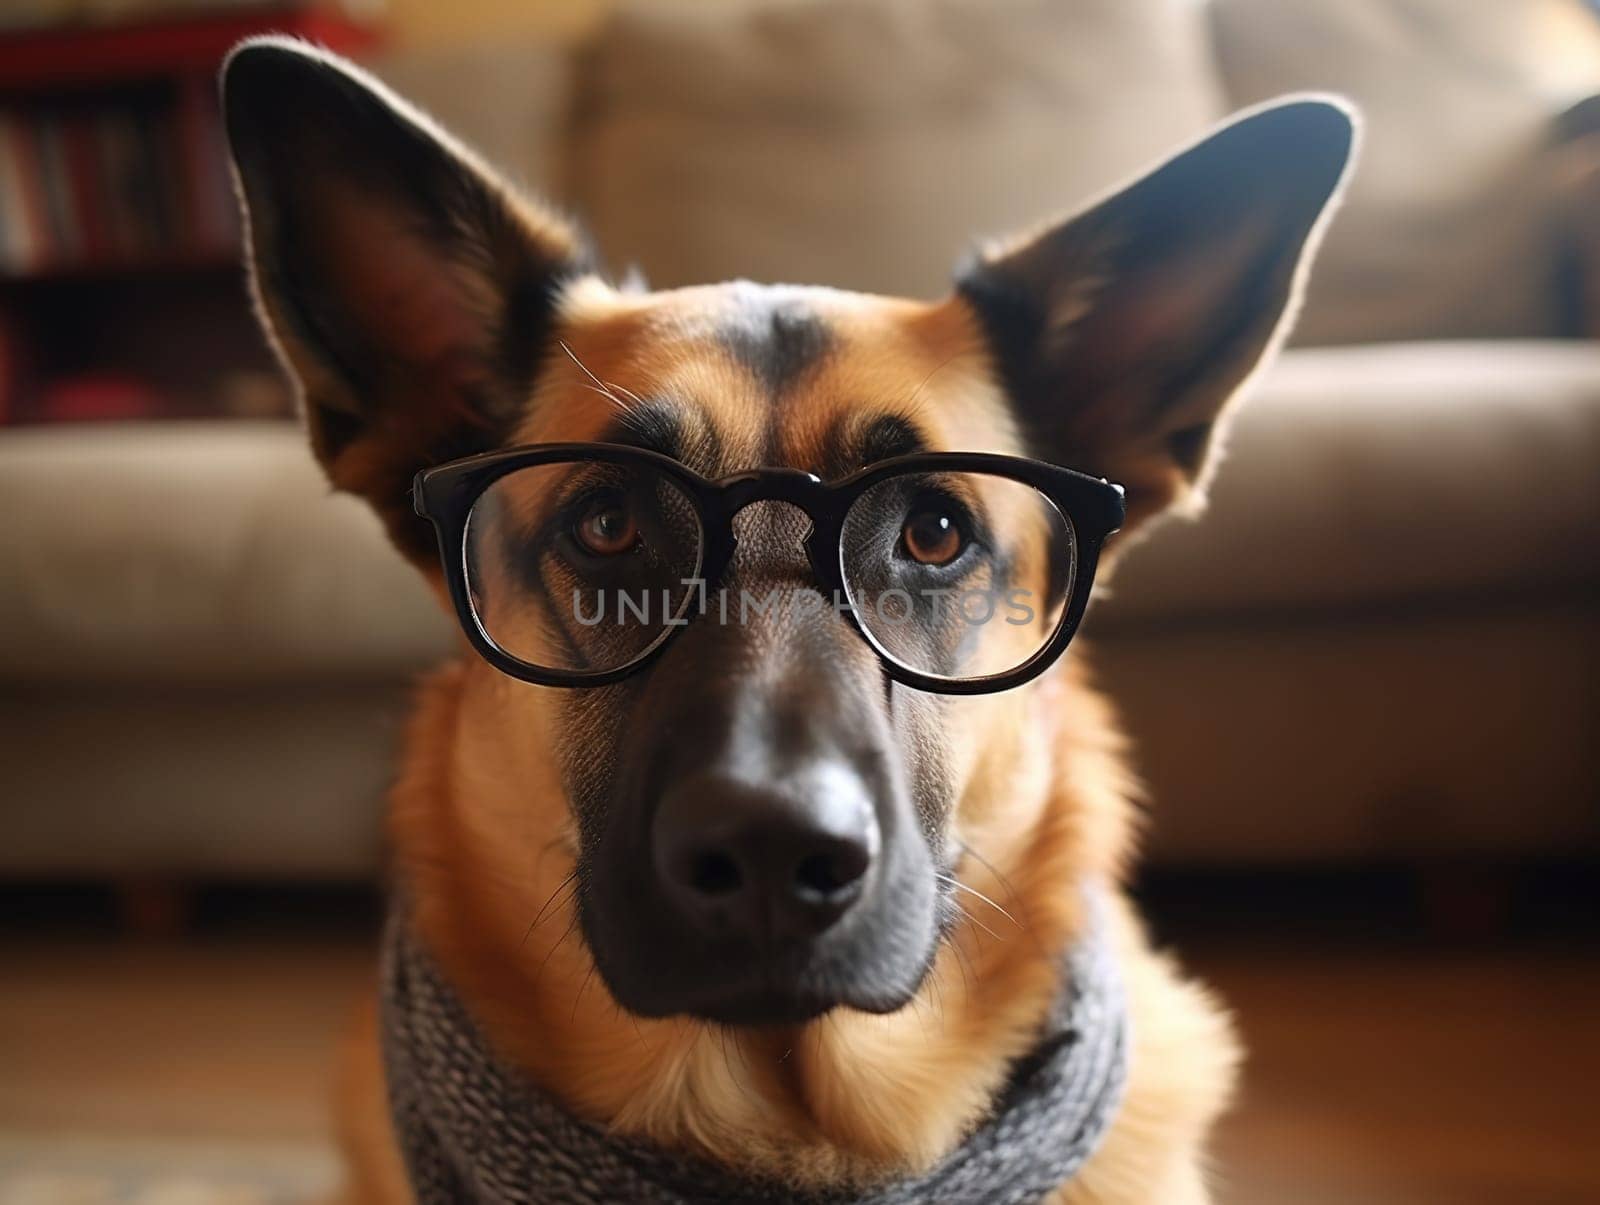 Smart Dog German Shepherd Breed In Glasses Looking Into The Camera by tan4ikk1